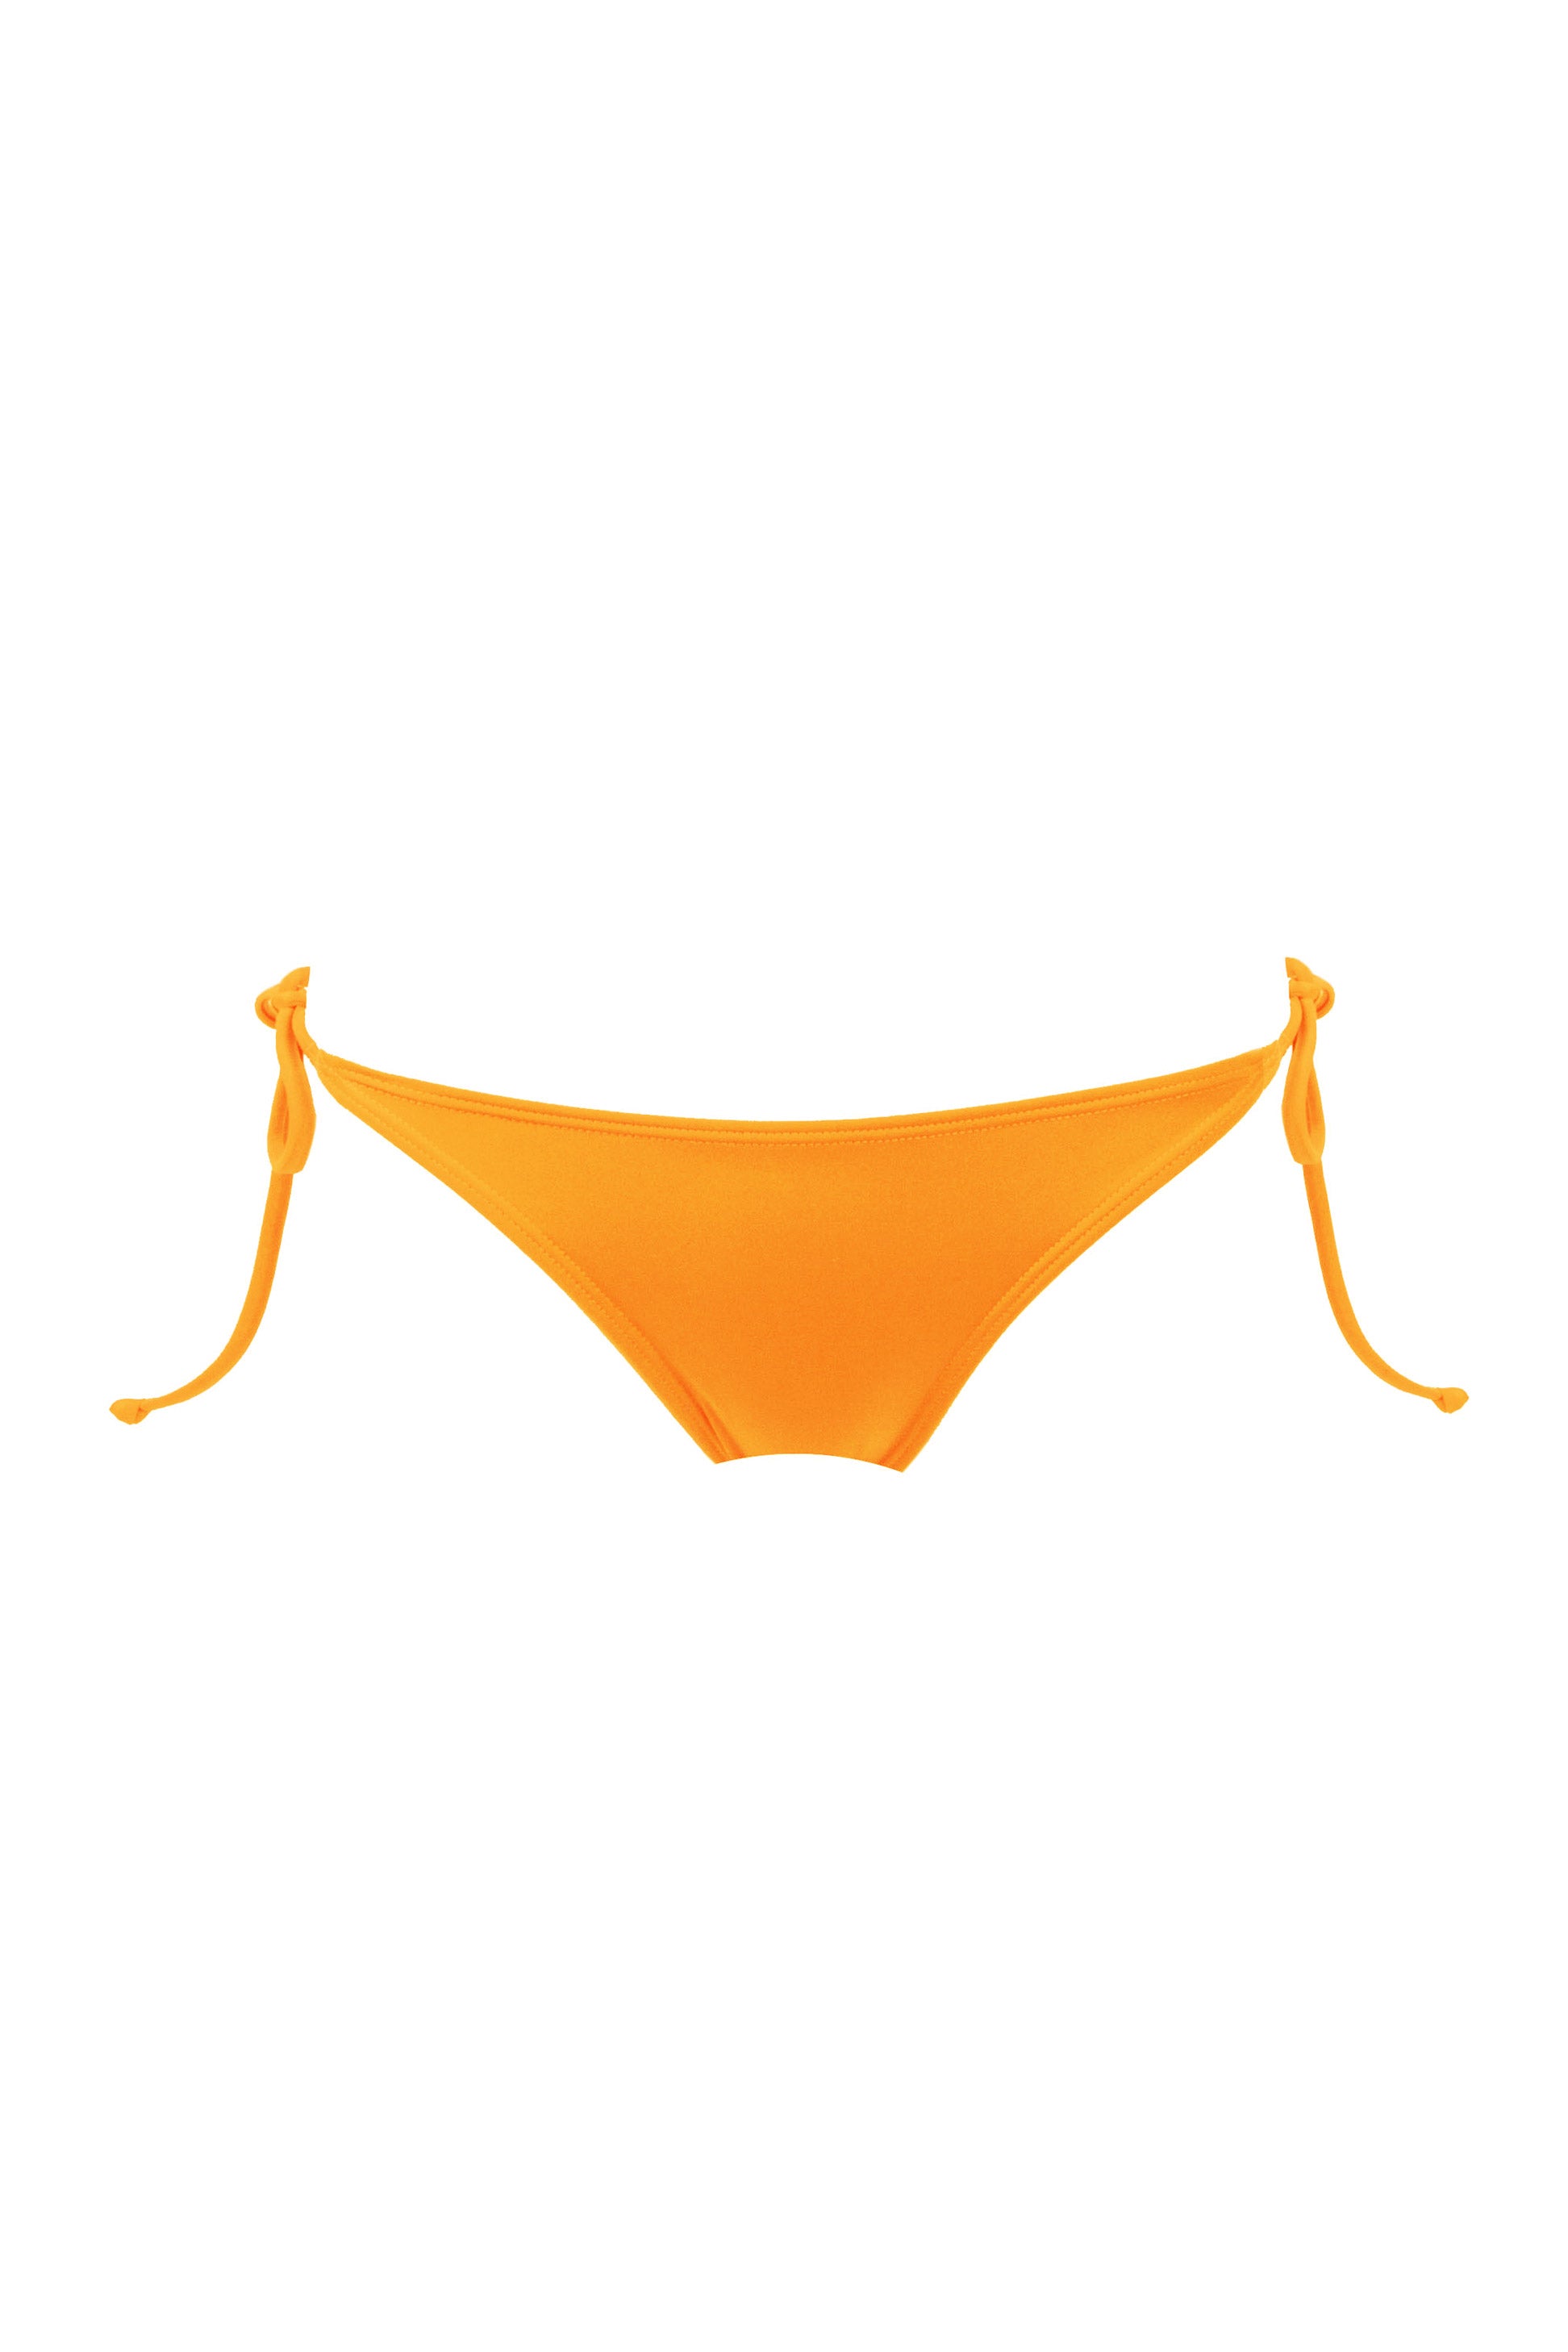 Good Morning Mango // Brazlian Whale Tail Side-Tie Bottom